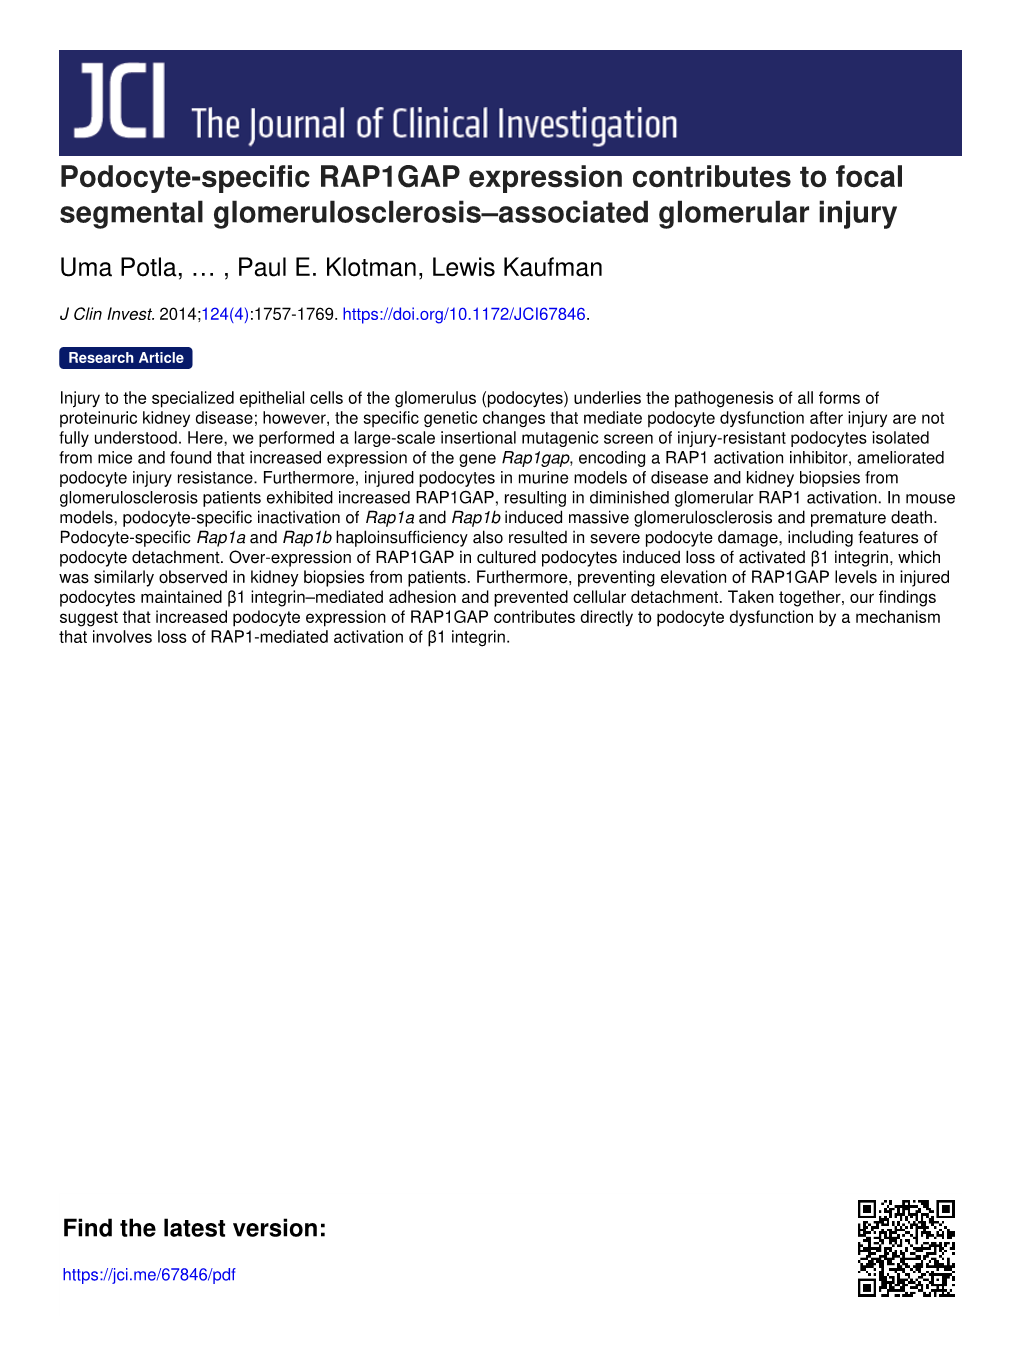 Podocyte-Specific RAP1GAP Expression Contributes to Focal Segmental Glomerulosclerosis–Associated Glomerular Injury